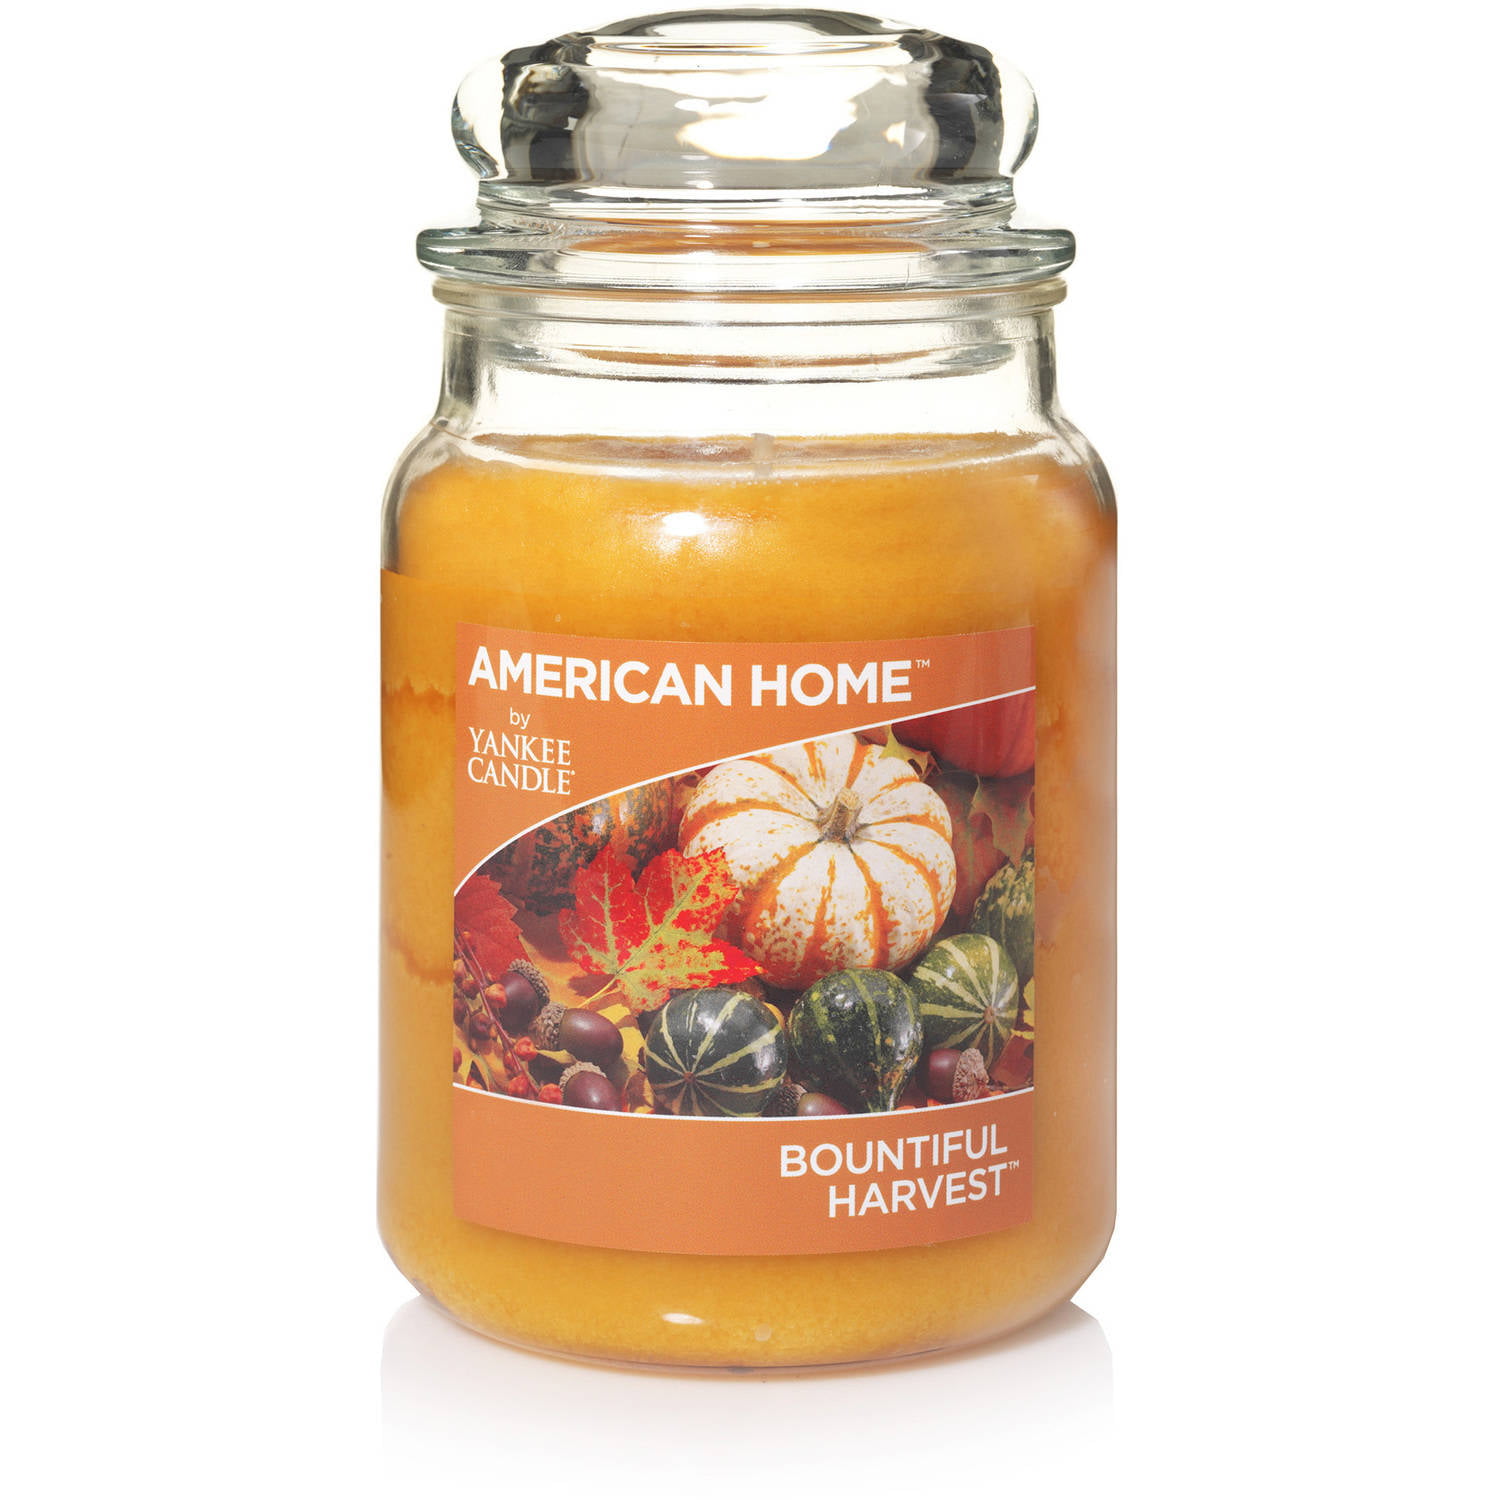 NEW YANKEE CANDLE American Home  Jar Candle 4 oz BOUNTIFUL HARVEST-SEASONAL 